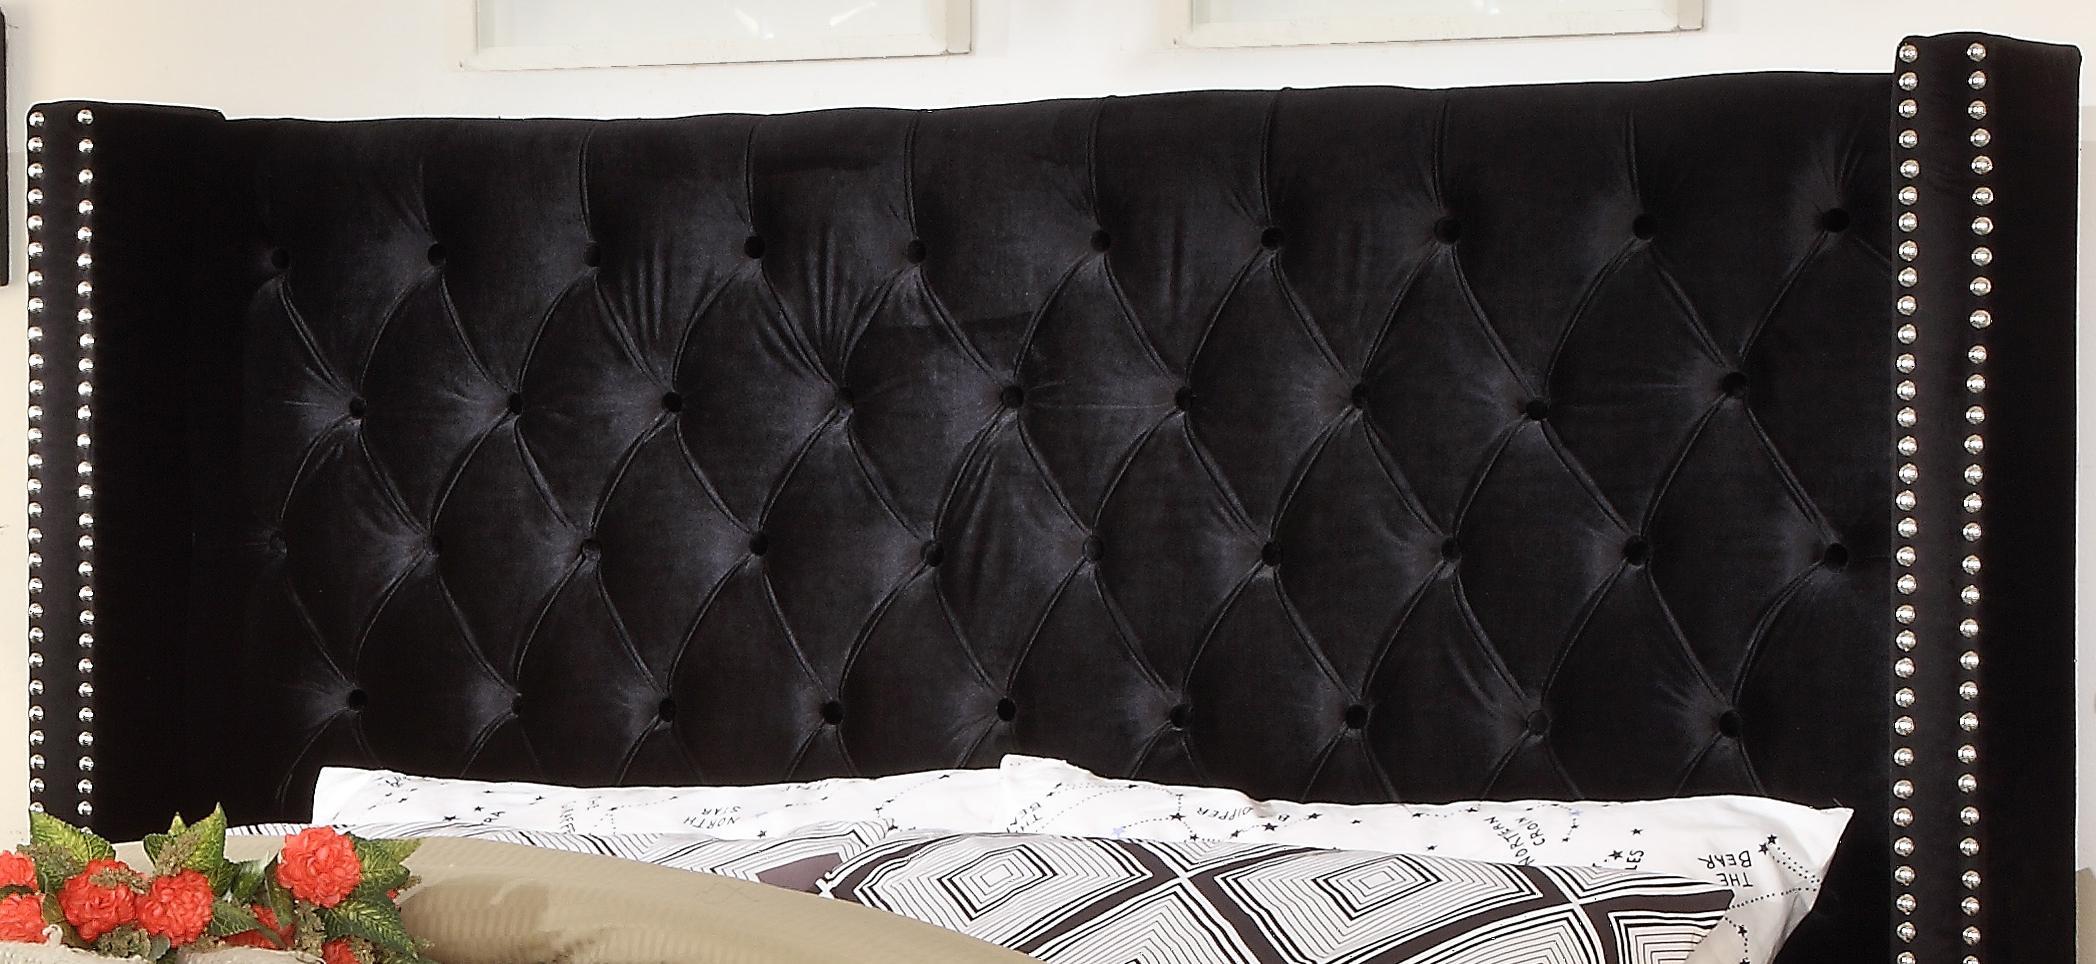 

    
Meridian Furniture AidenBlack-Q Platform Bed Black AidenBlack-Q
